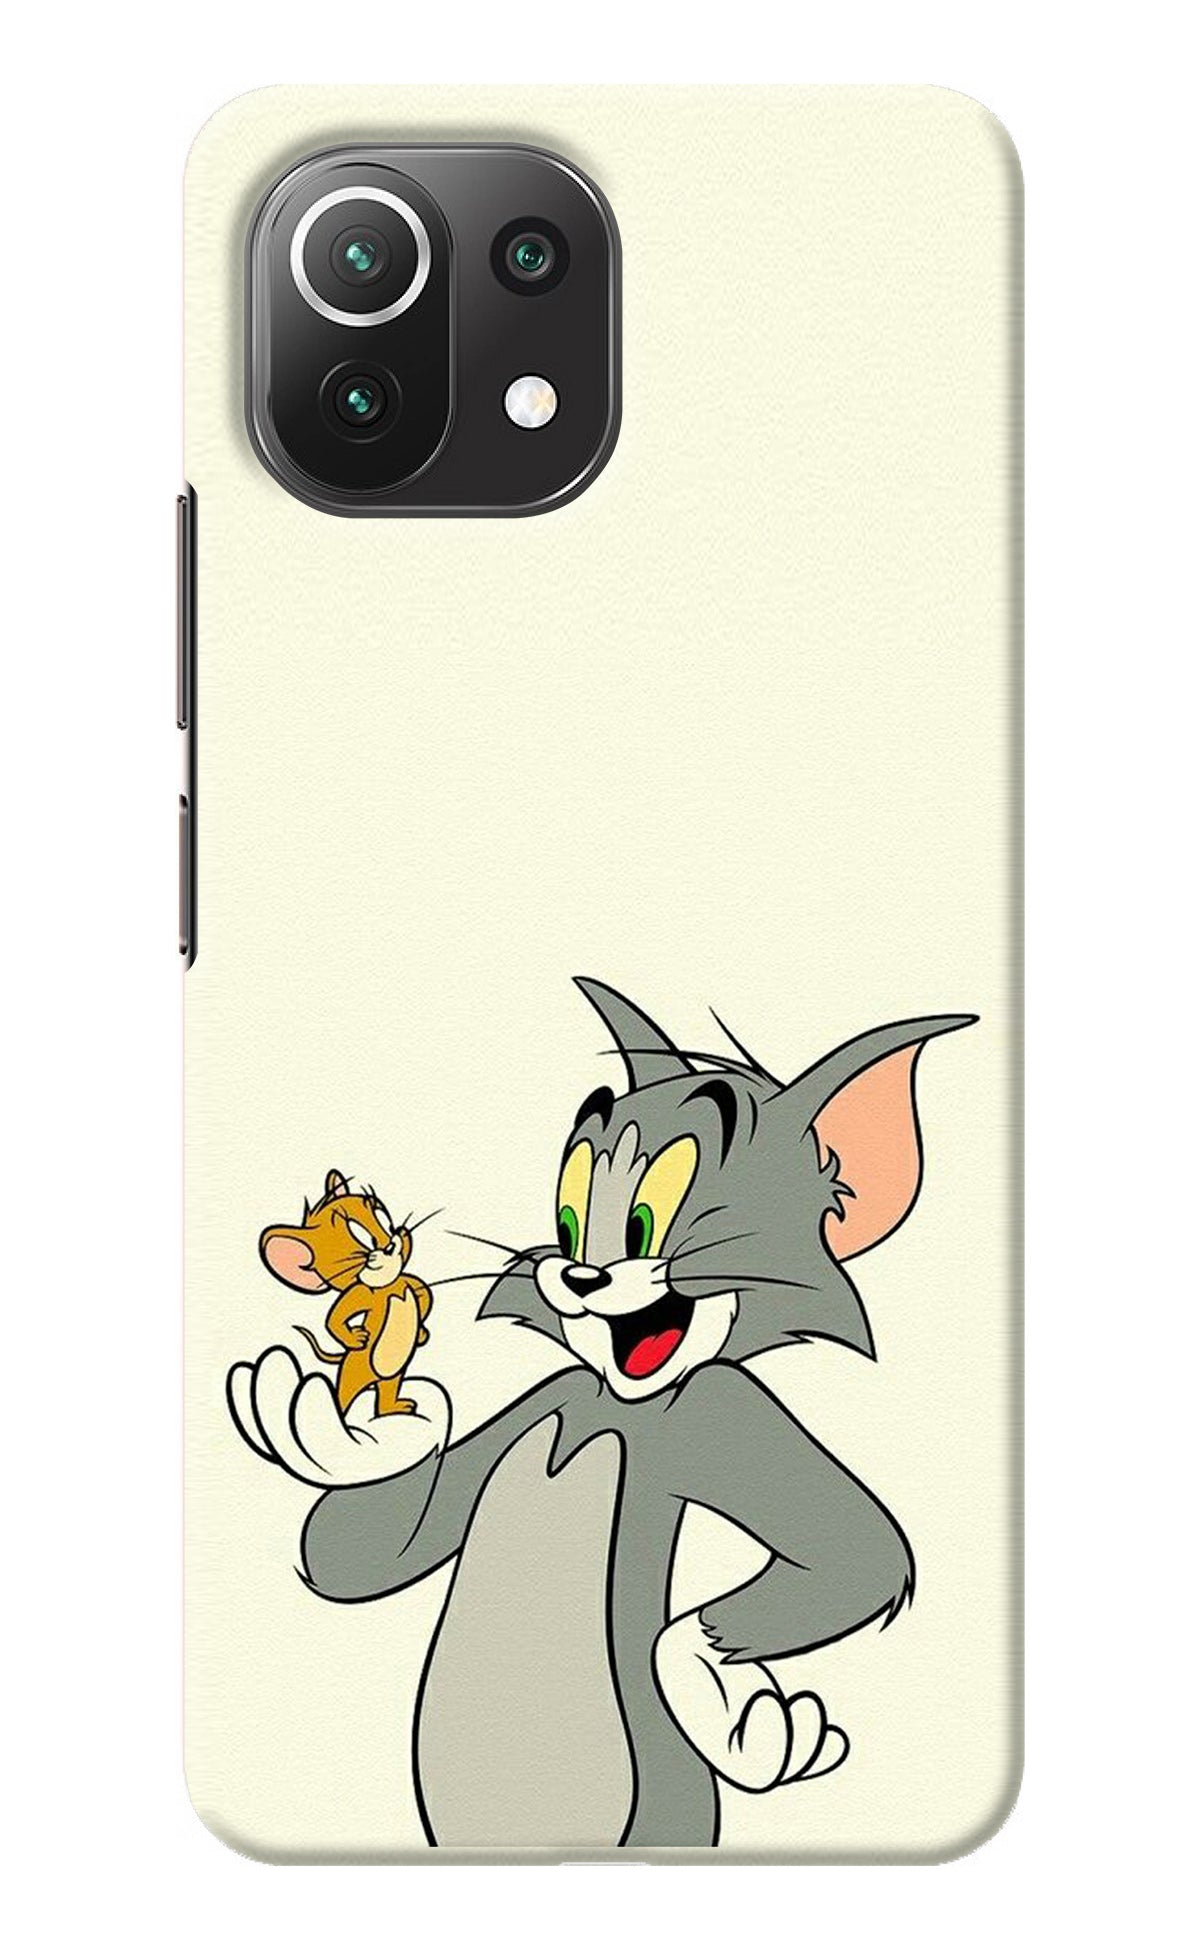 Tom & Jerry Mi 11 Lite Back Cover